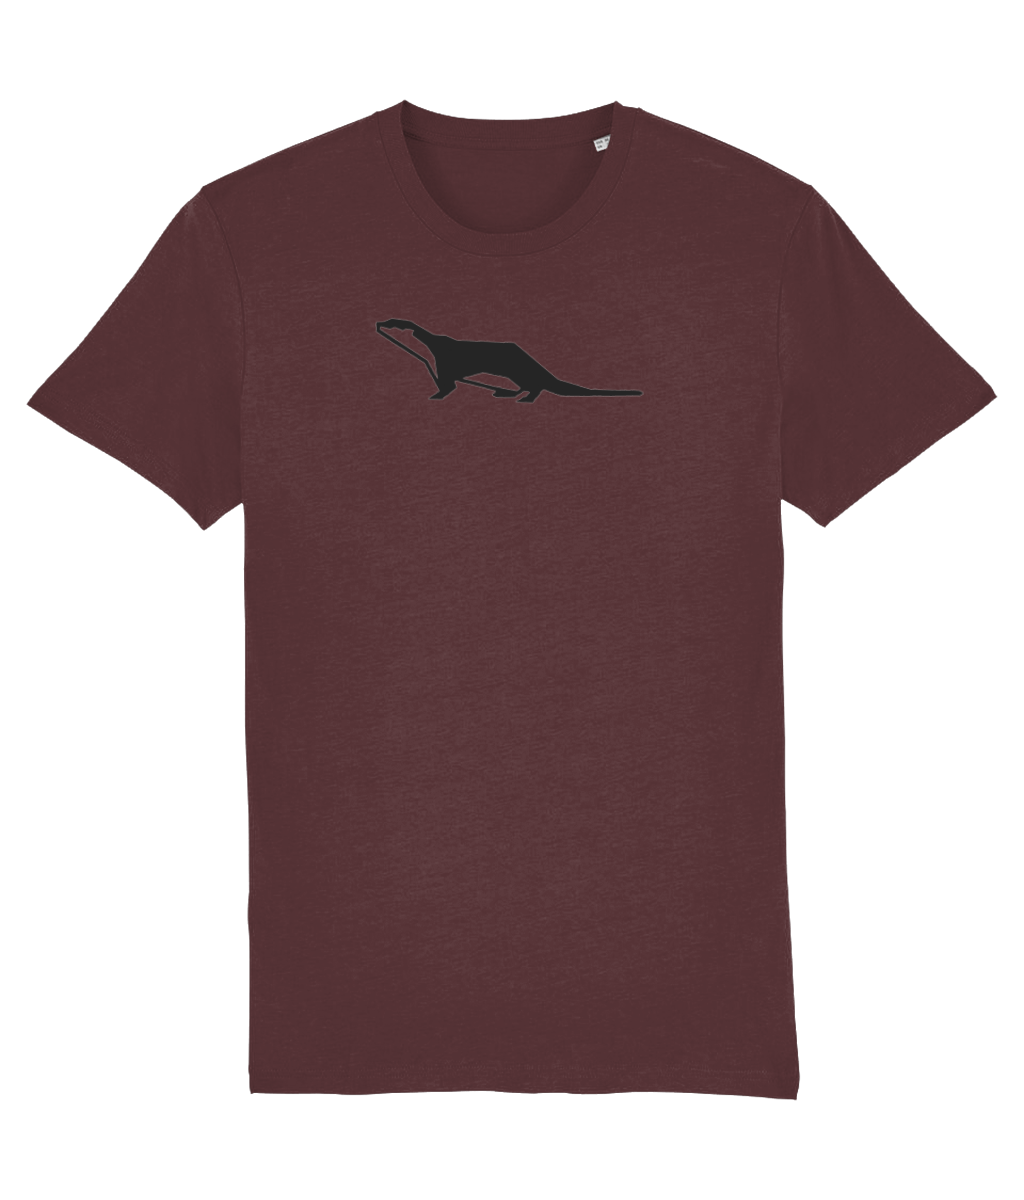 Otter Gay Organic Cotton T-Shirt in Burgundy